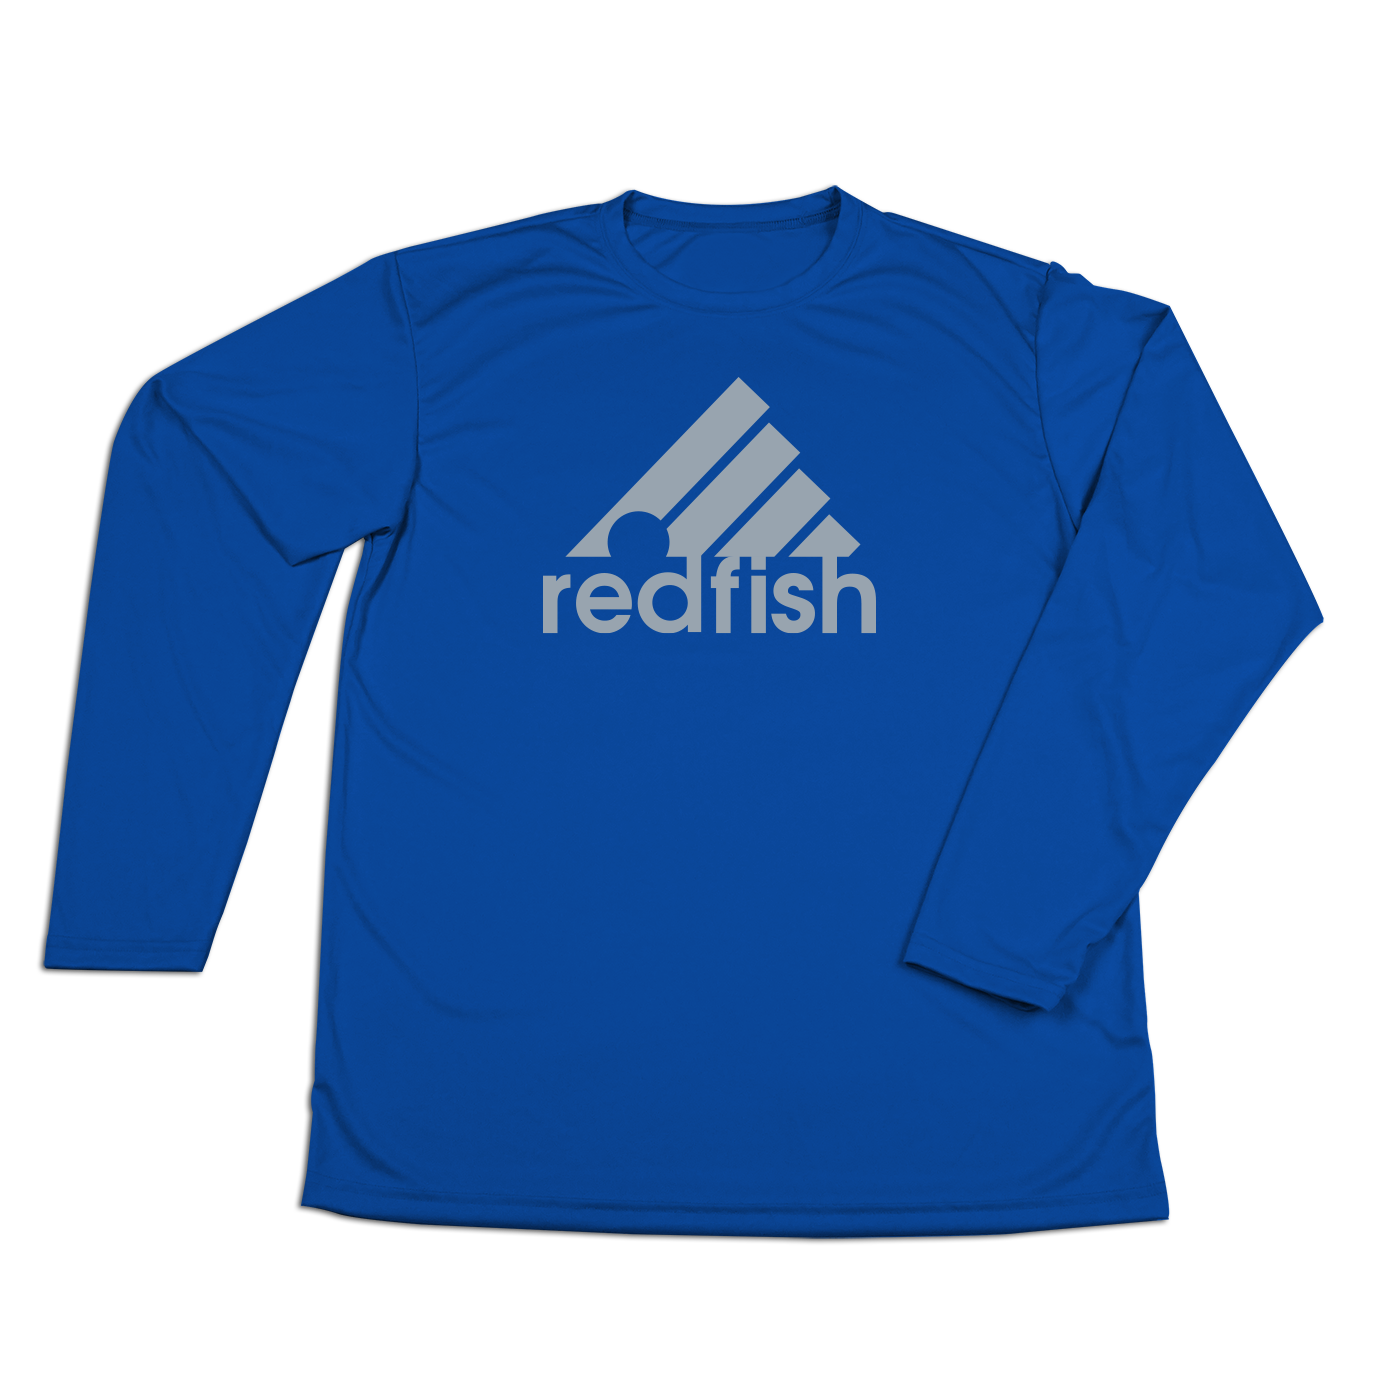 #REDFISH Performance Long Sleeve Shirt - Gray Print